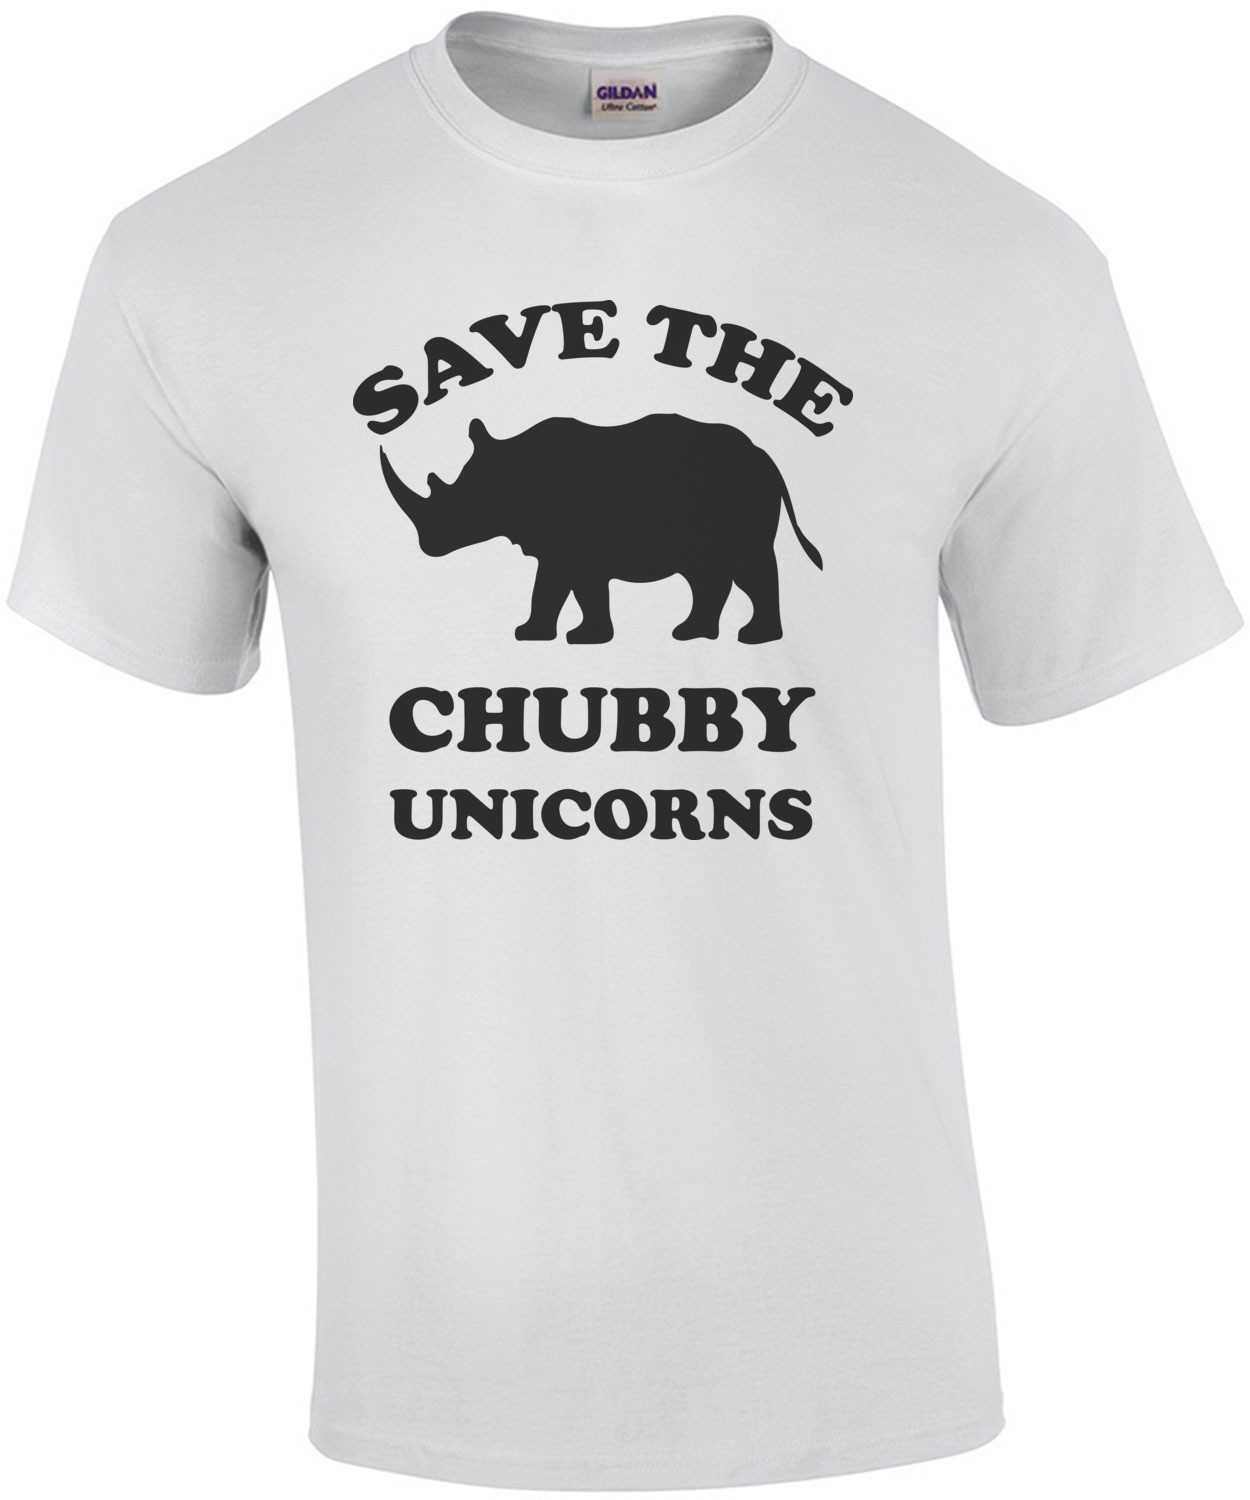 Save the chubby unicorns